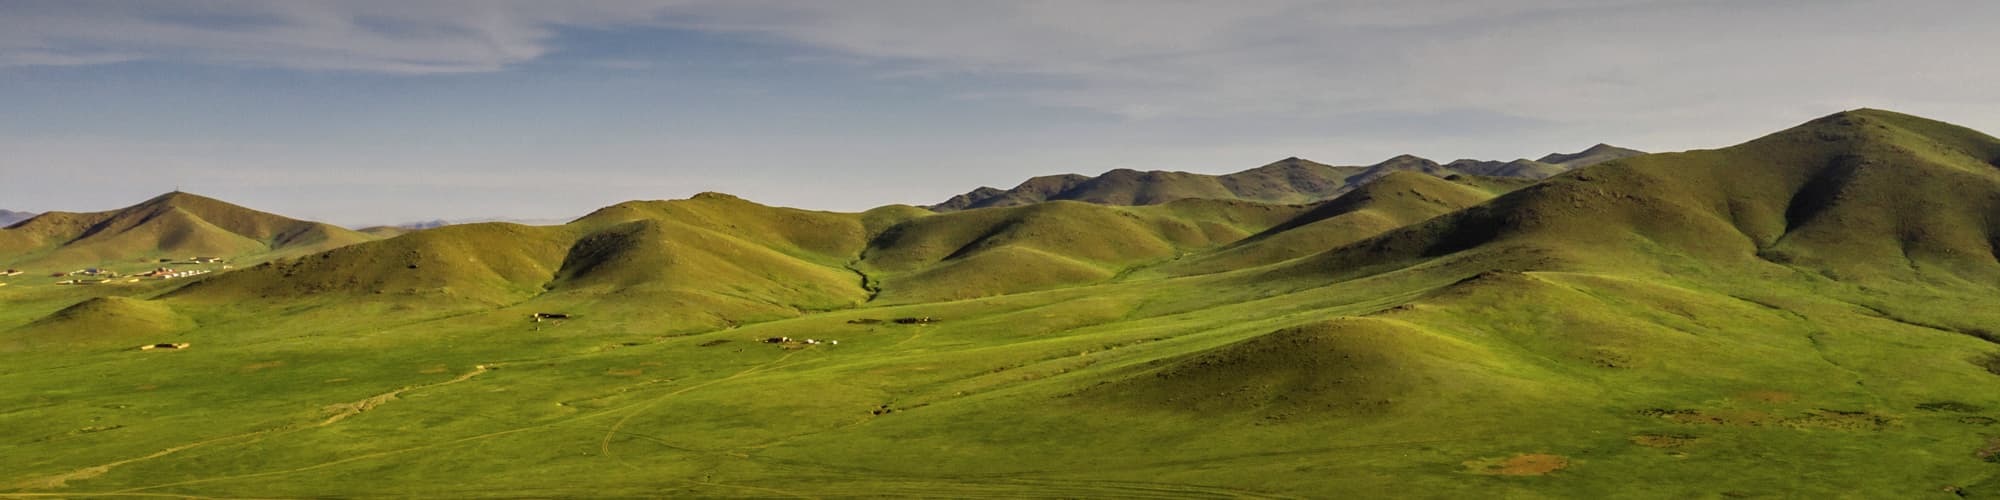 Trek en Mongolie : randonnée, circuit et voyage © Travel Stock / Adobe Stock